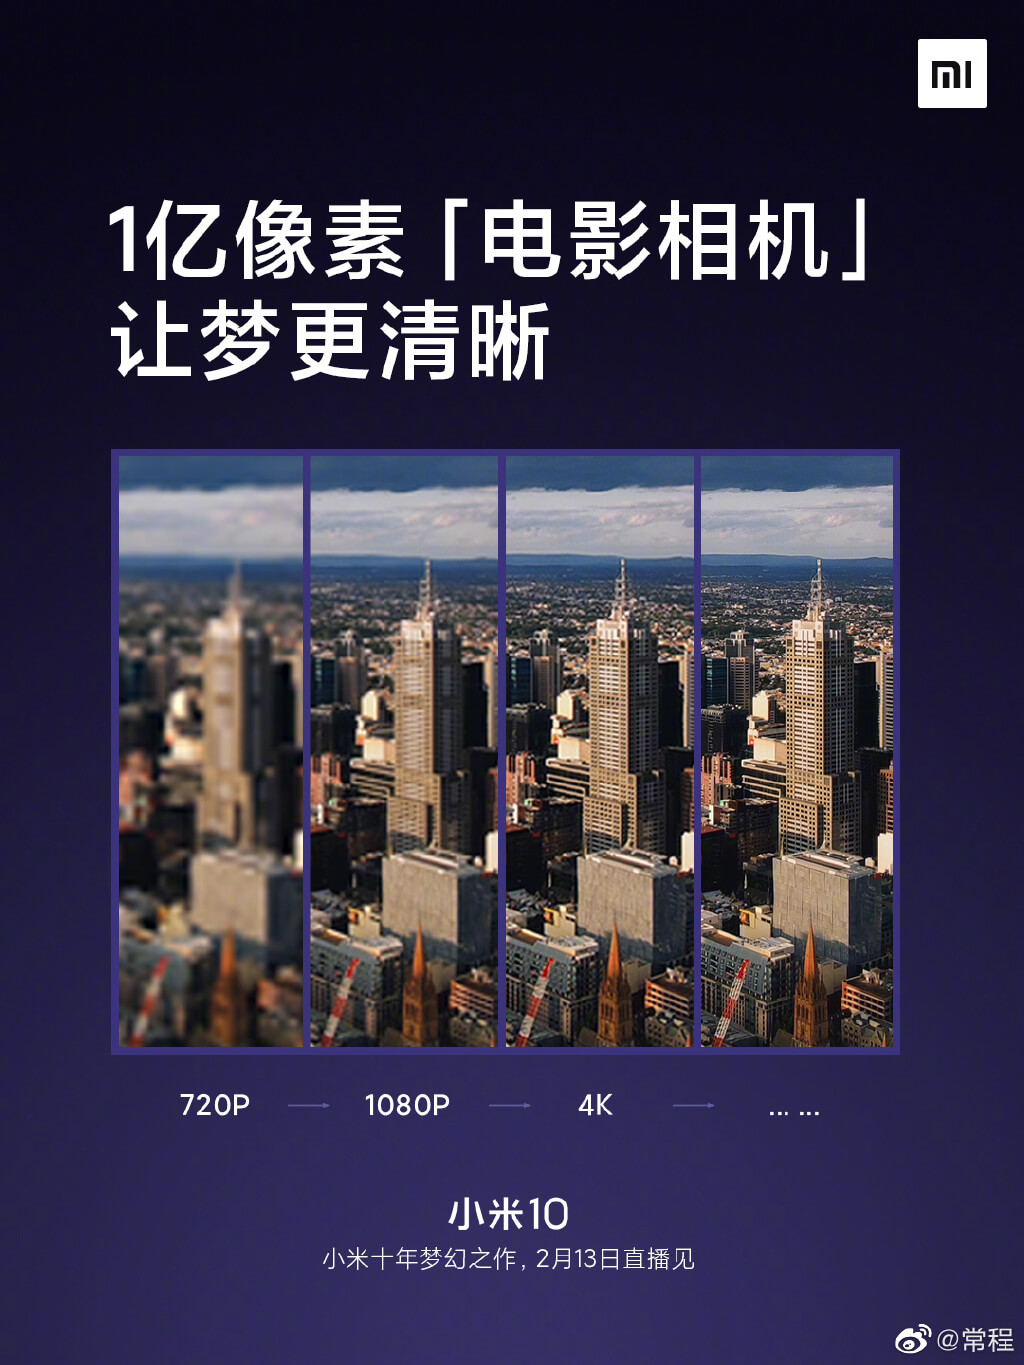 Xiaomi Mi 10 характеристики камеры